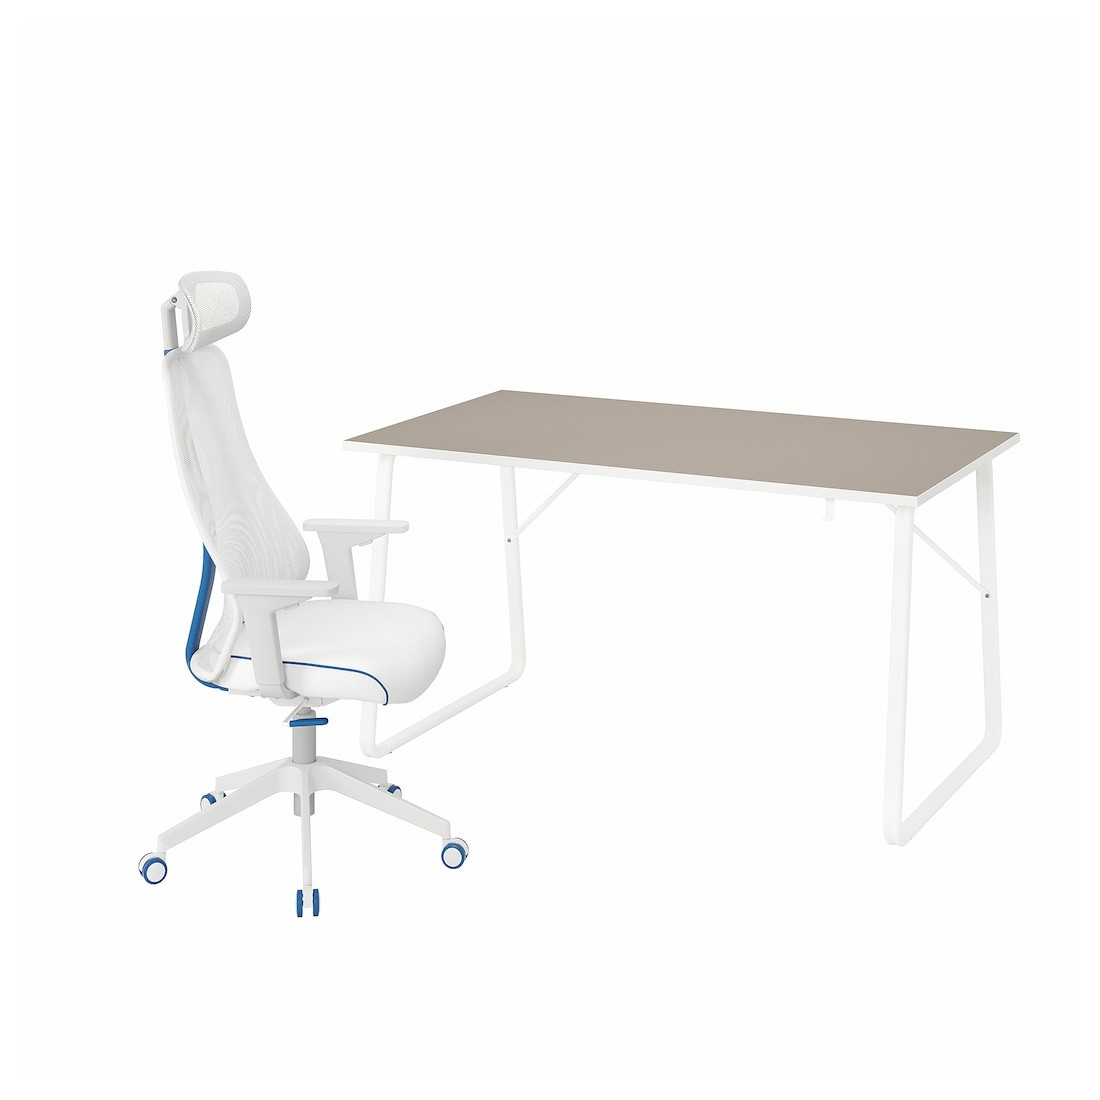 HUVUDSPELARE / MATCHSPEL Геймерський стіл та крісло, бежевий / білий